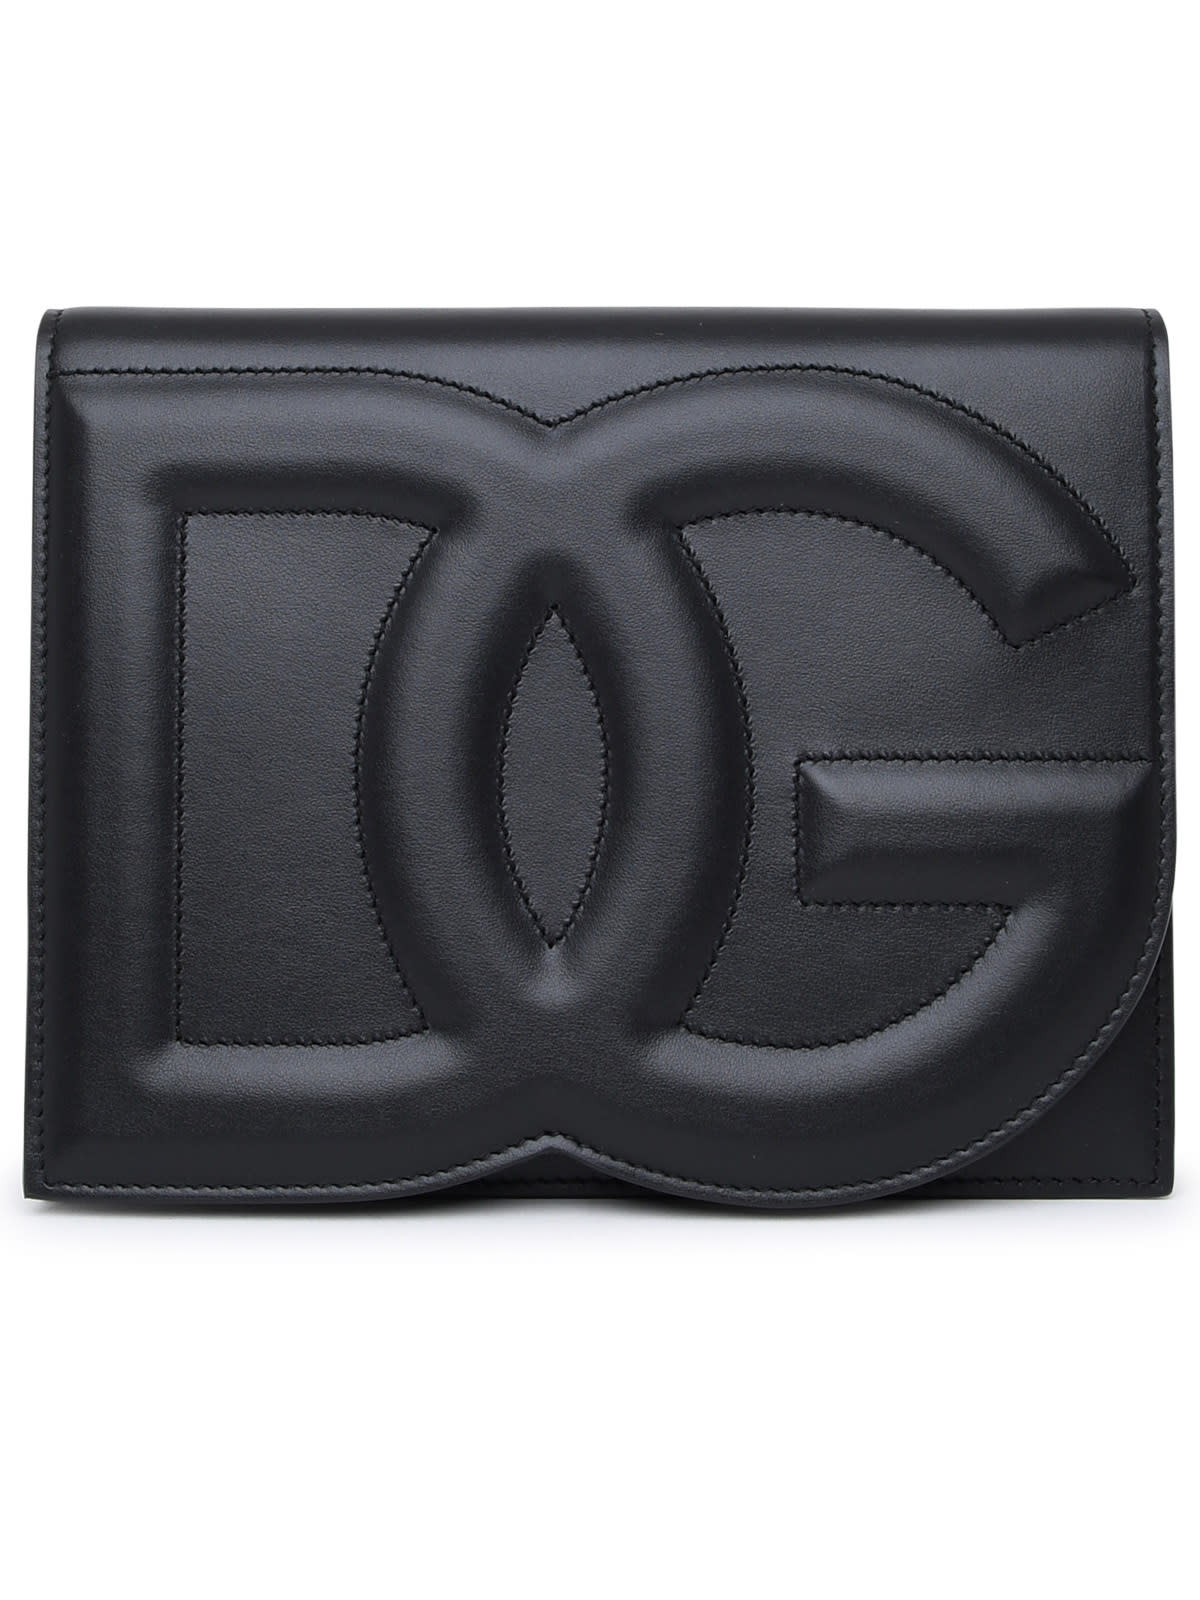 Dolce & Gabbana Black Leather Bag